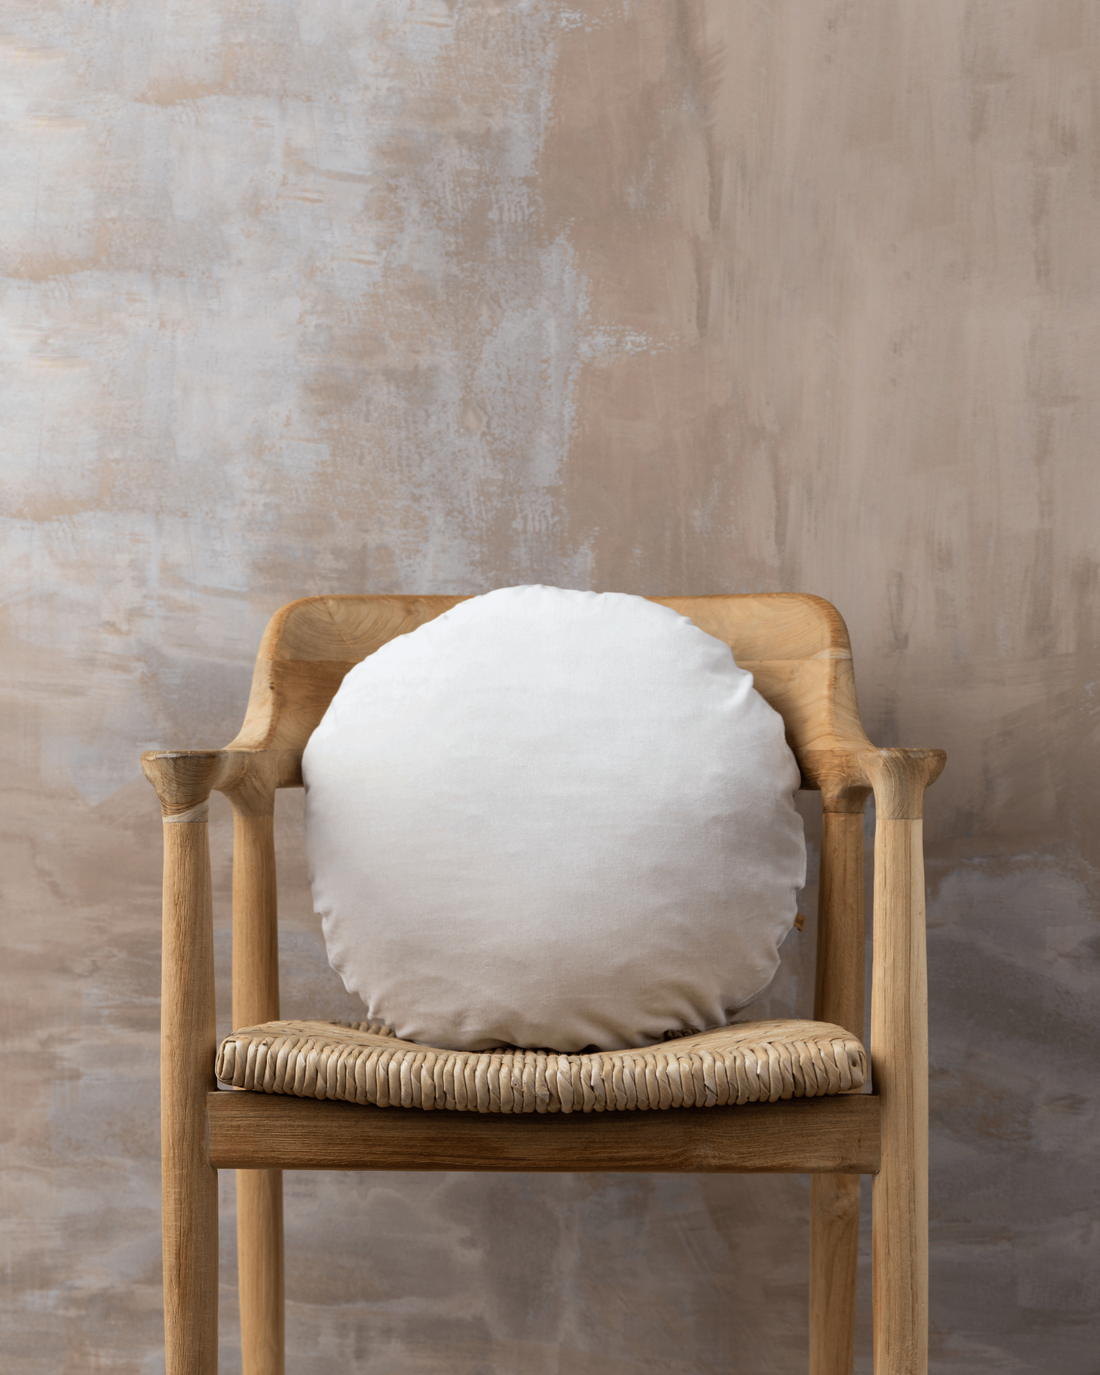 Micro-Suede Laurel Green Saddle Stool Cushions - Gaucho Stool / Satori